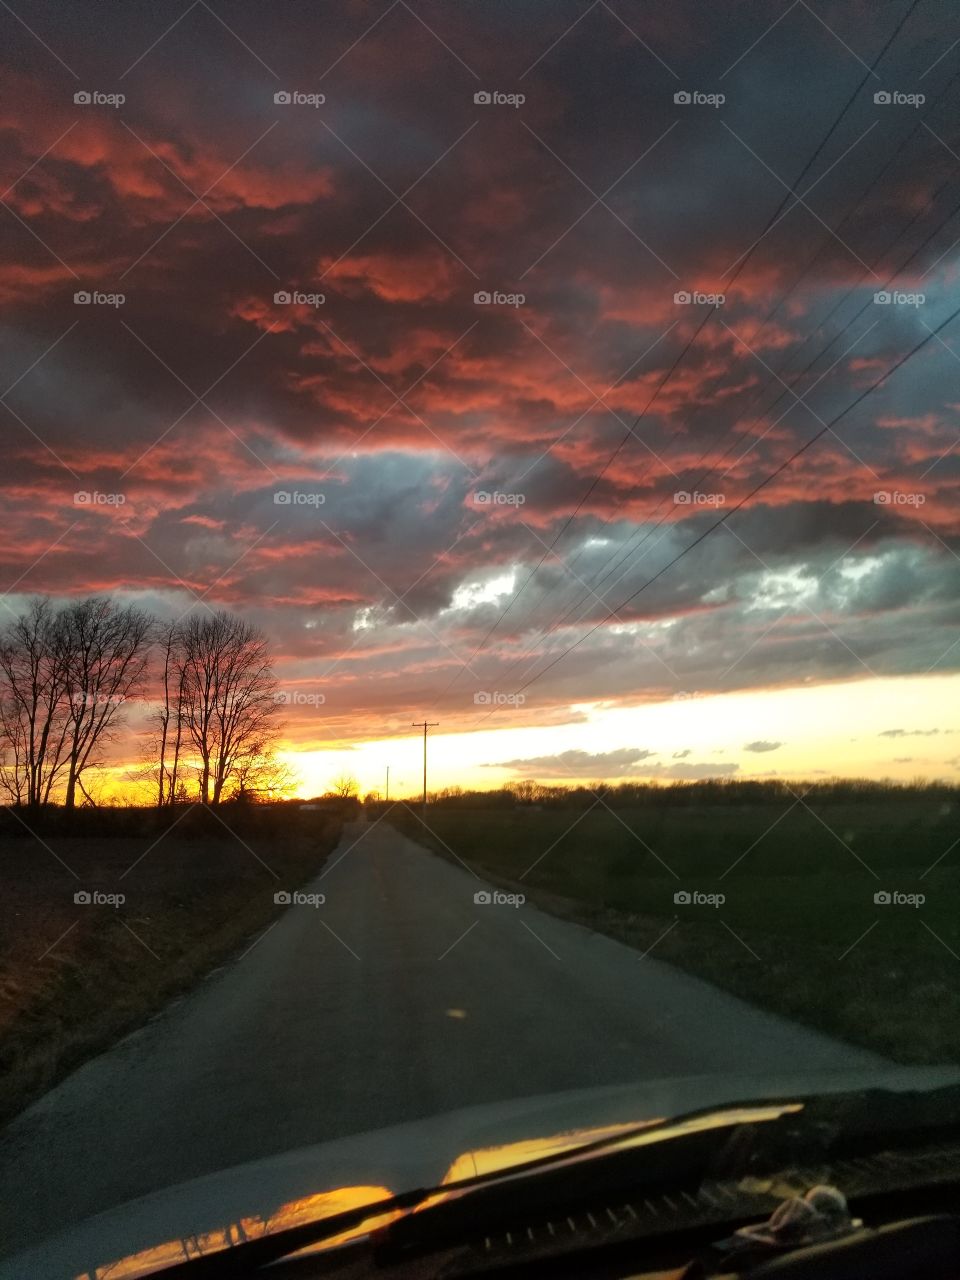 sunsets warm Indiana nights rural Indiana backroad cruises